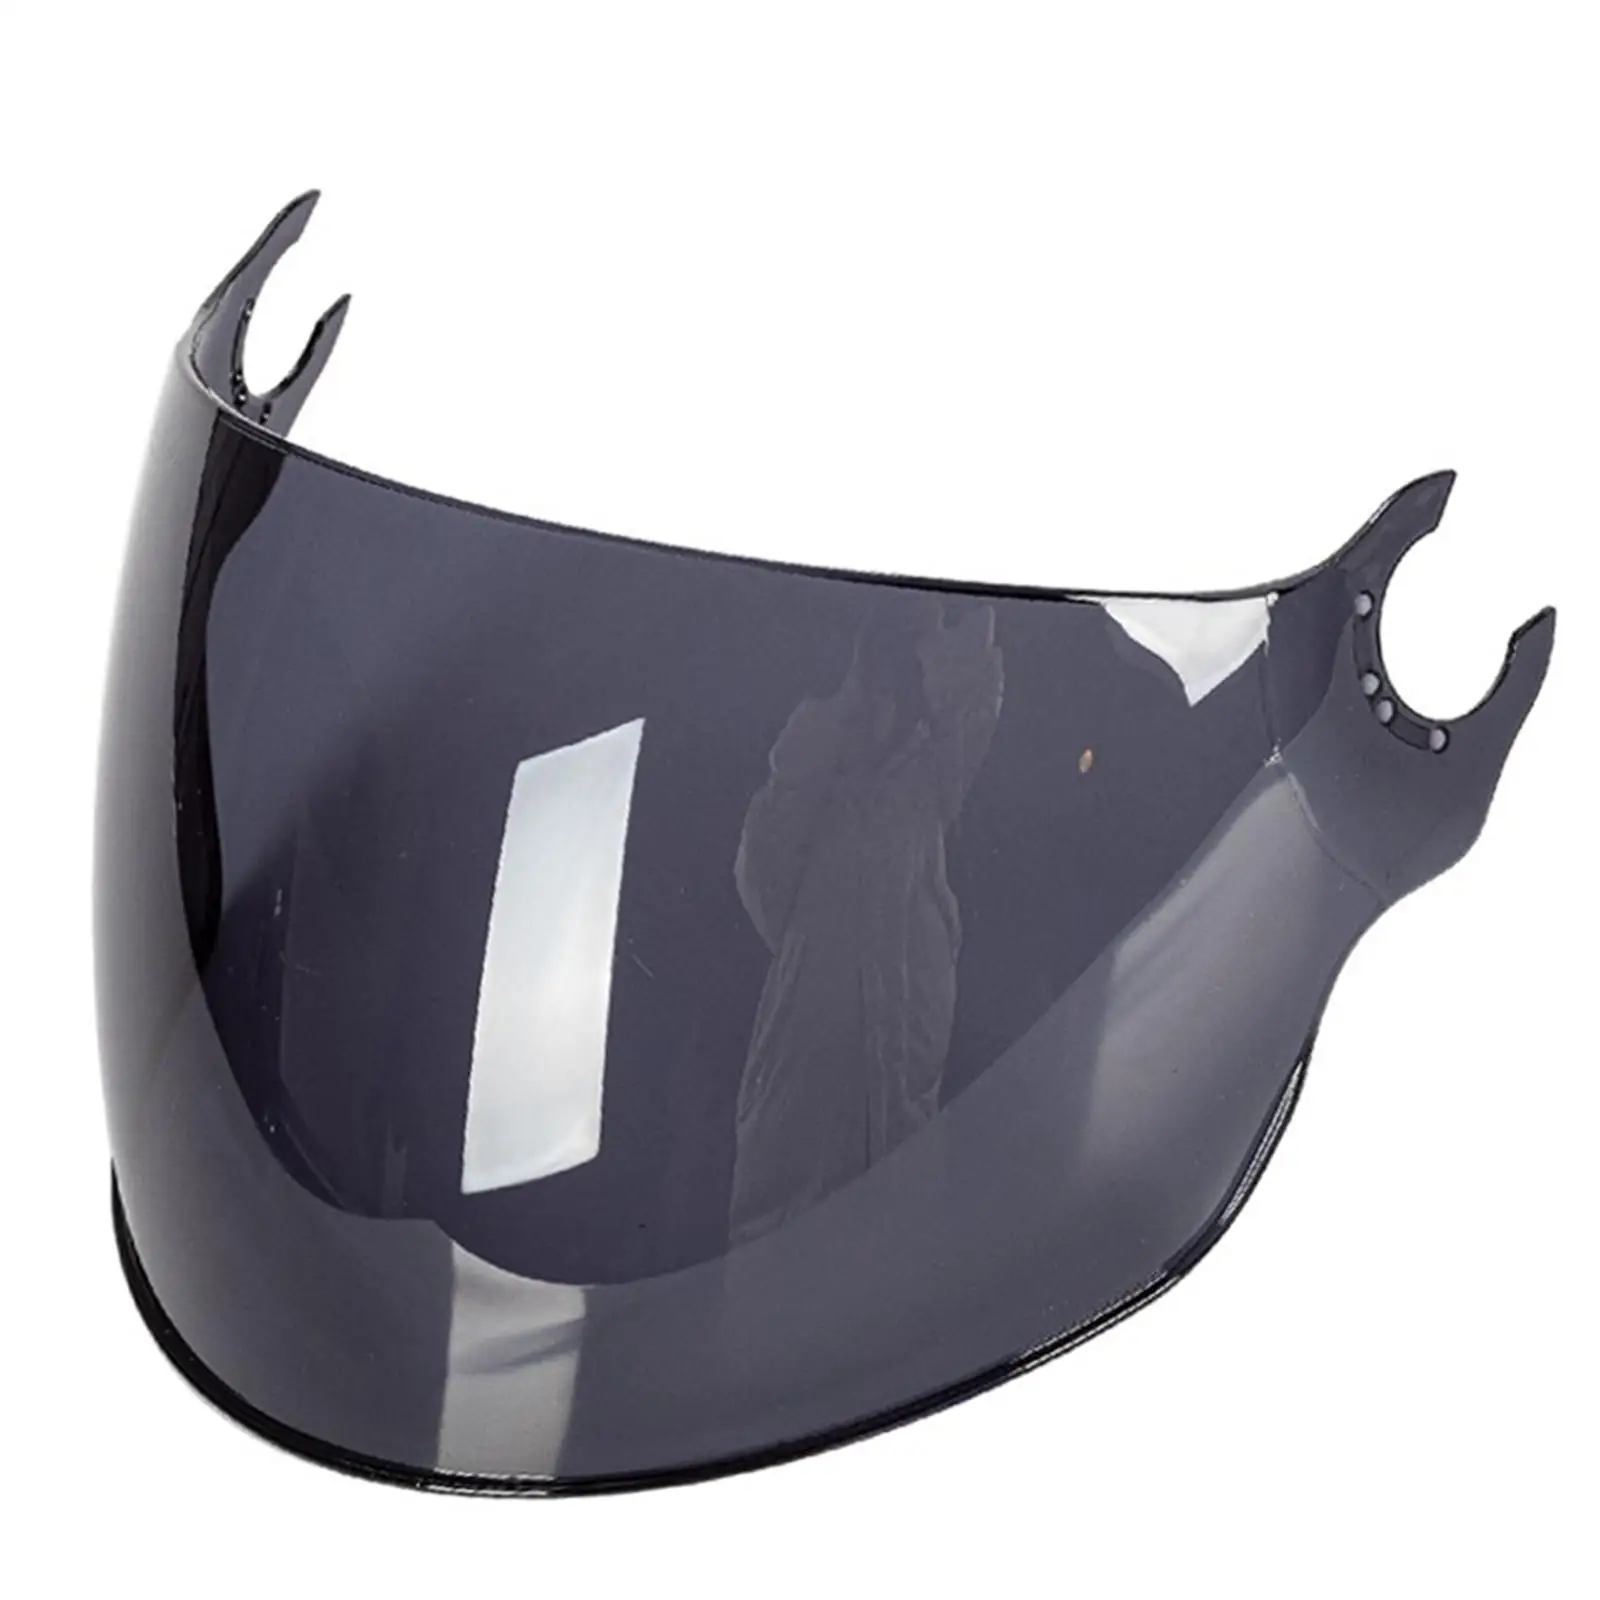 Helmet Visor Flip up Windscreen Lens Anti-Scratch Fit for LS2 of562 Accessories